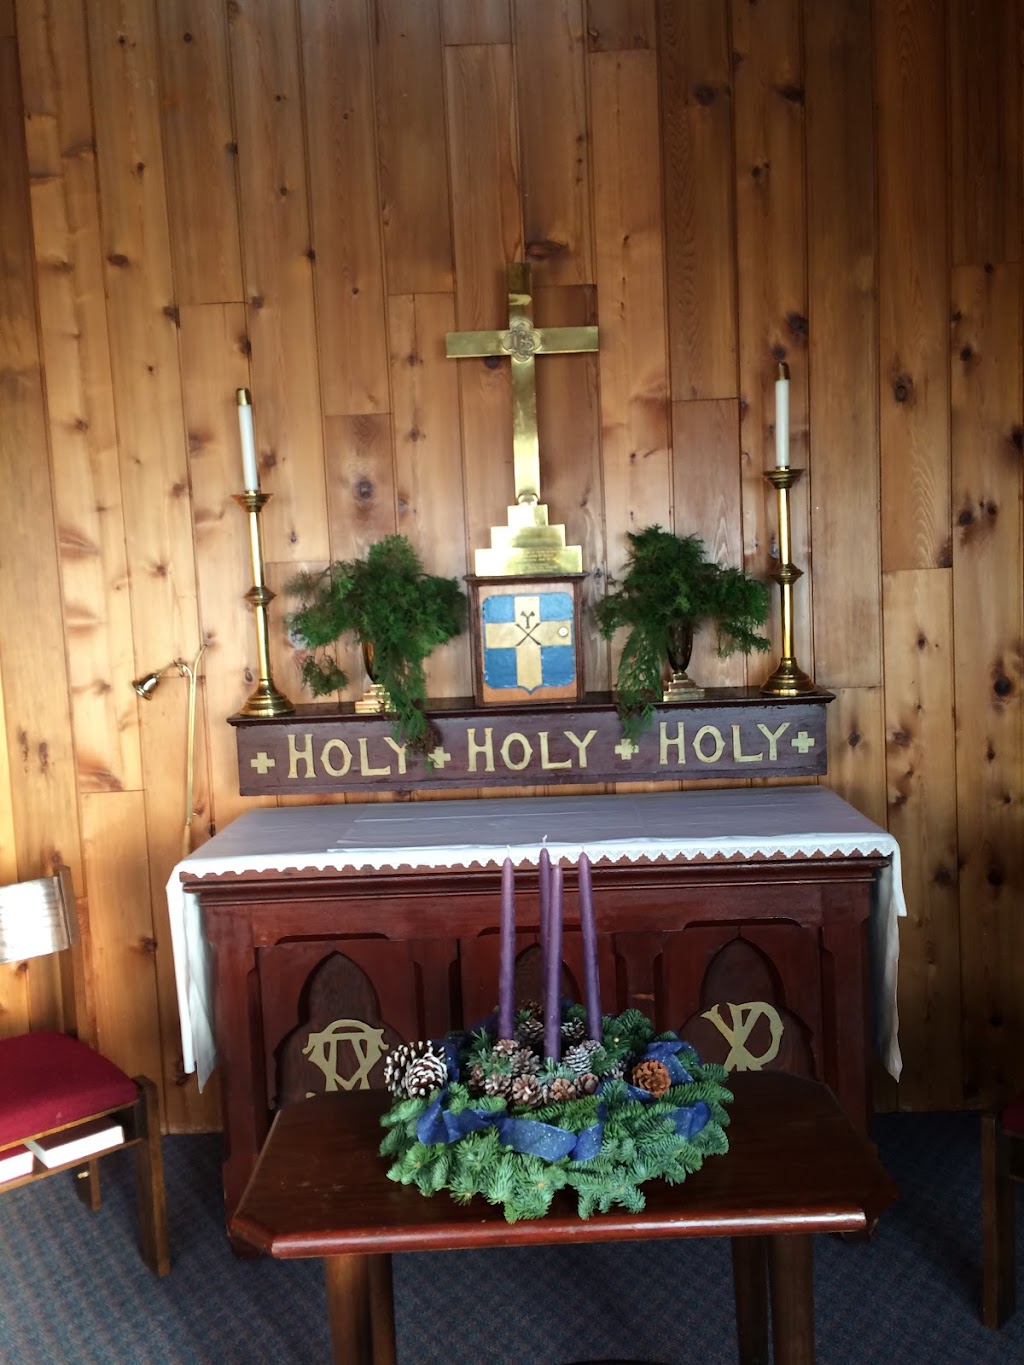 Christ Episcopal Church | 35350 E Division Rd, St Helens, OR 97051, USA | Phone: (503) 397-1033